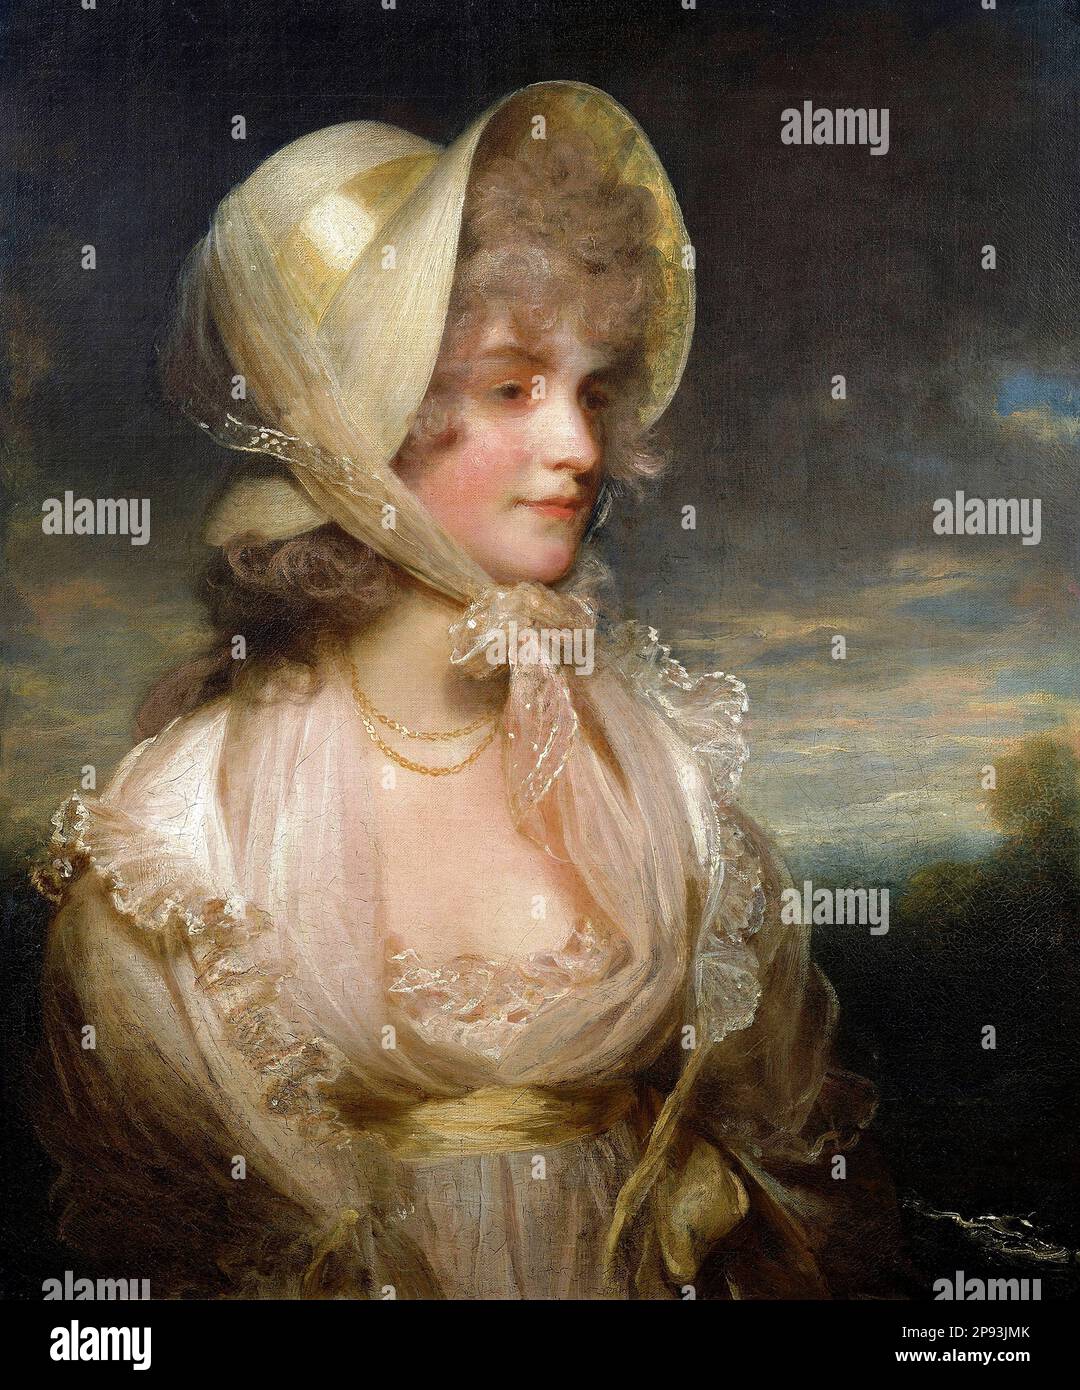 Elizabeth Sophia Baillie (née de Vismes) del artista inglés John Hoppner (1758 -1810), óleo sobre lienzo, c. 1795 Foto de stock